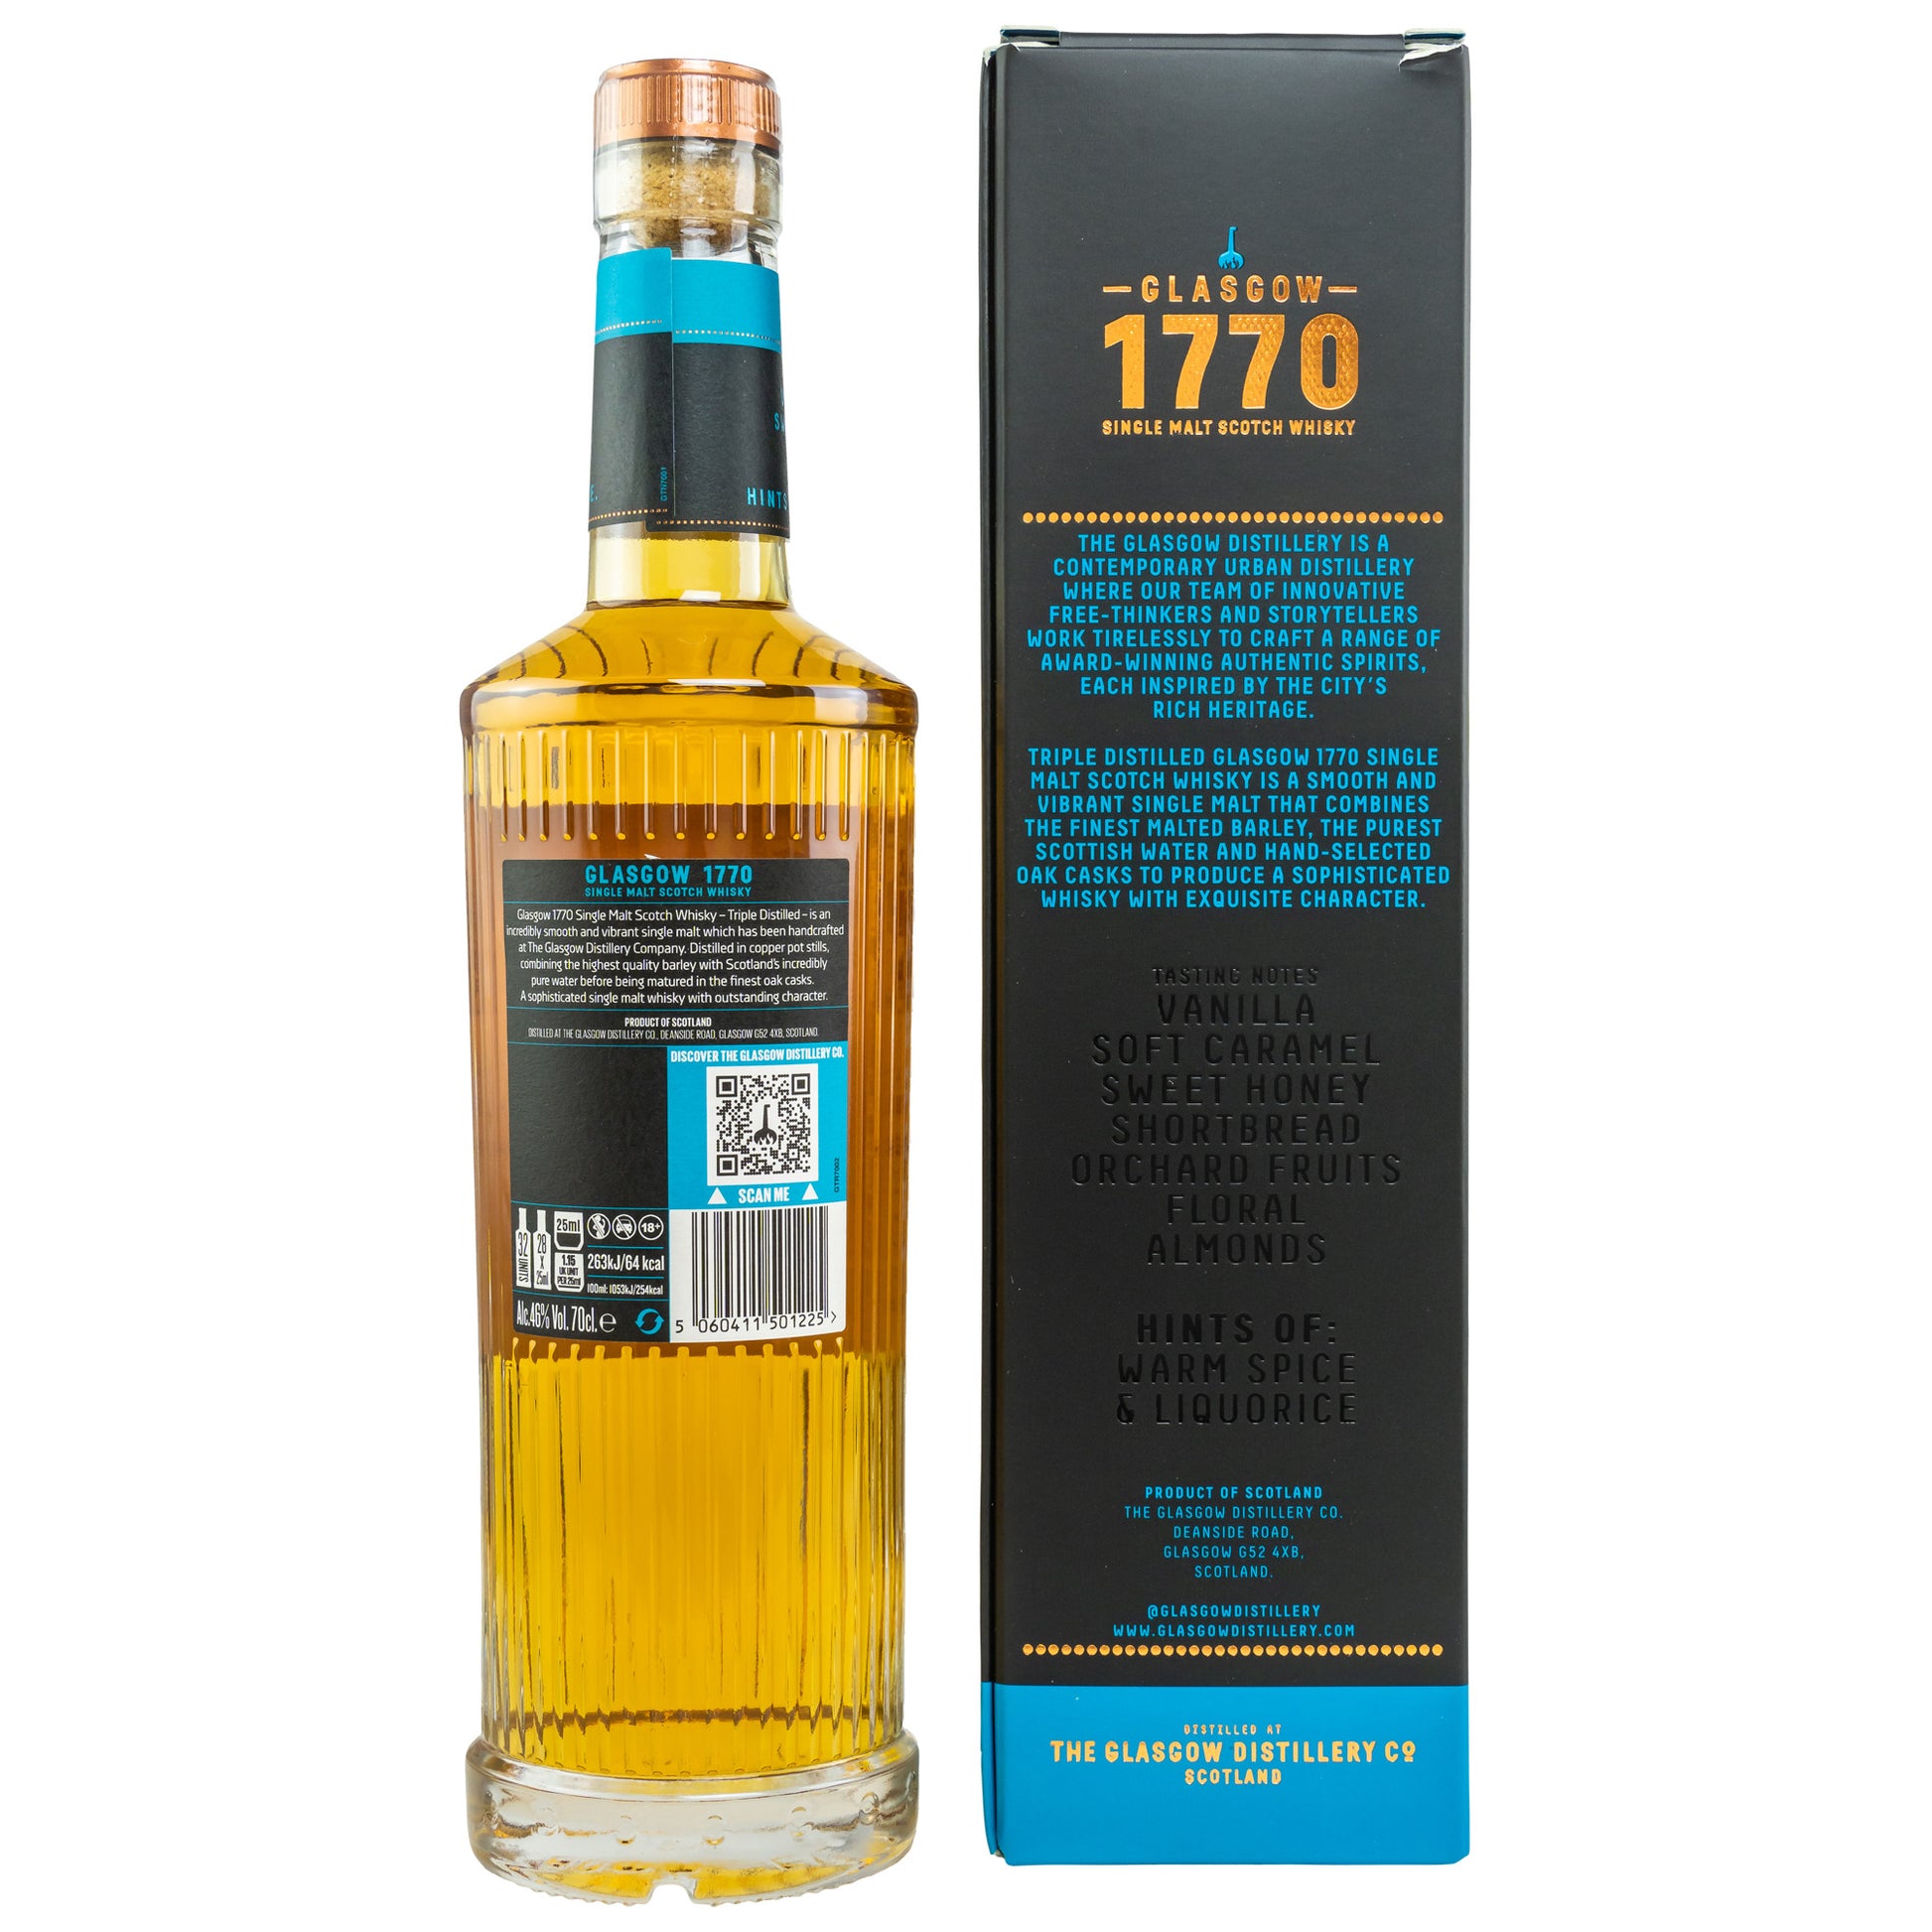 1770 GLASGOW -  Single Malt Scotch Whisky Triple Distilled Smooth - 46 % vol. - Schwarzbach Spirits